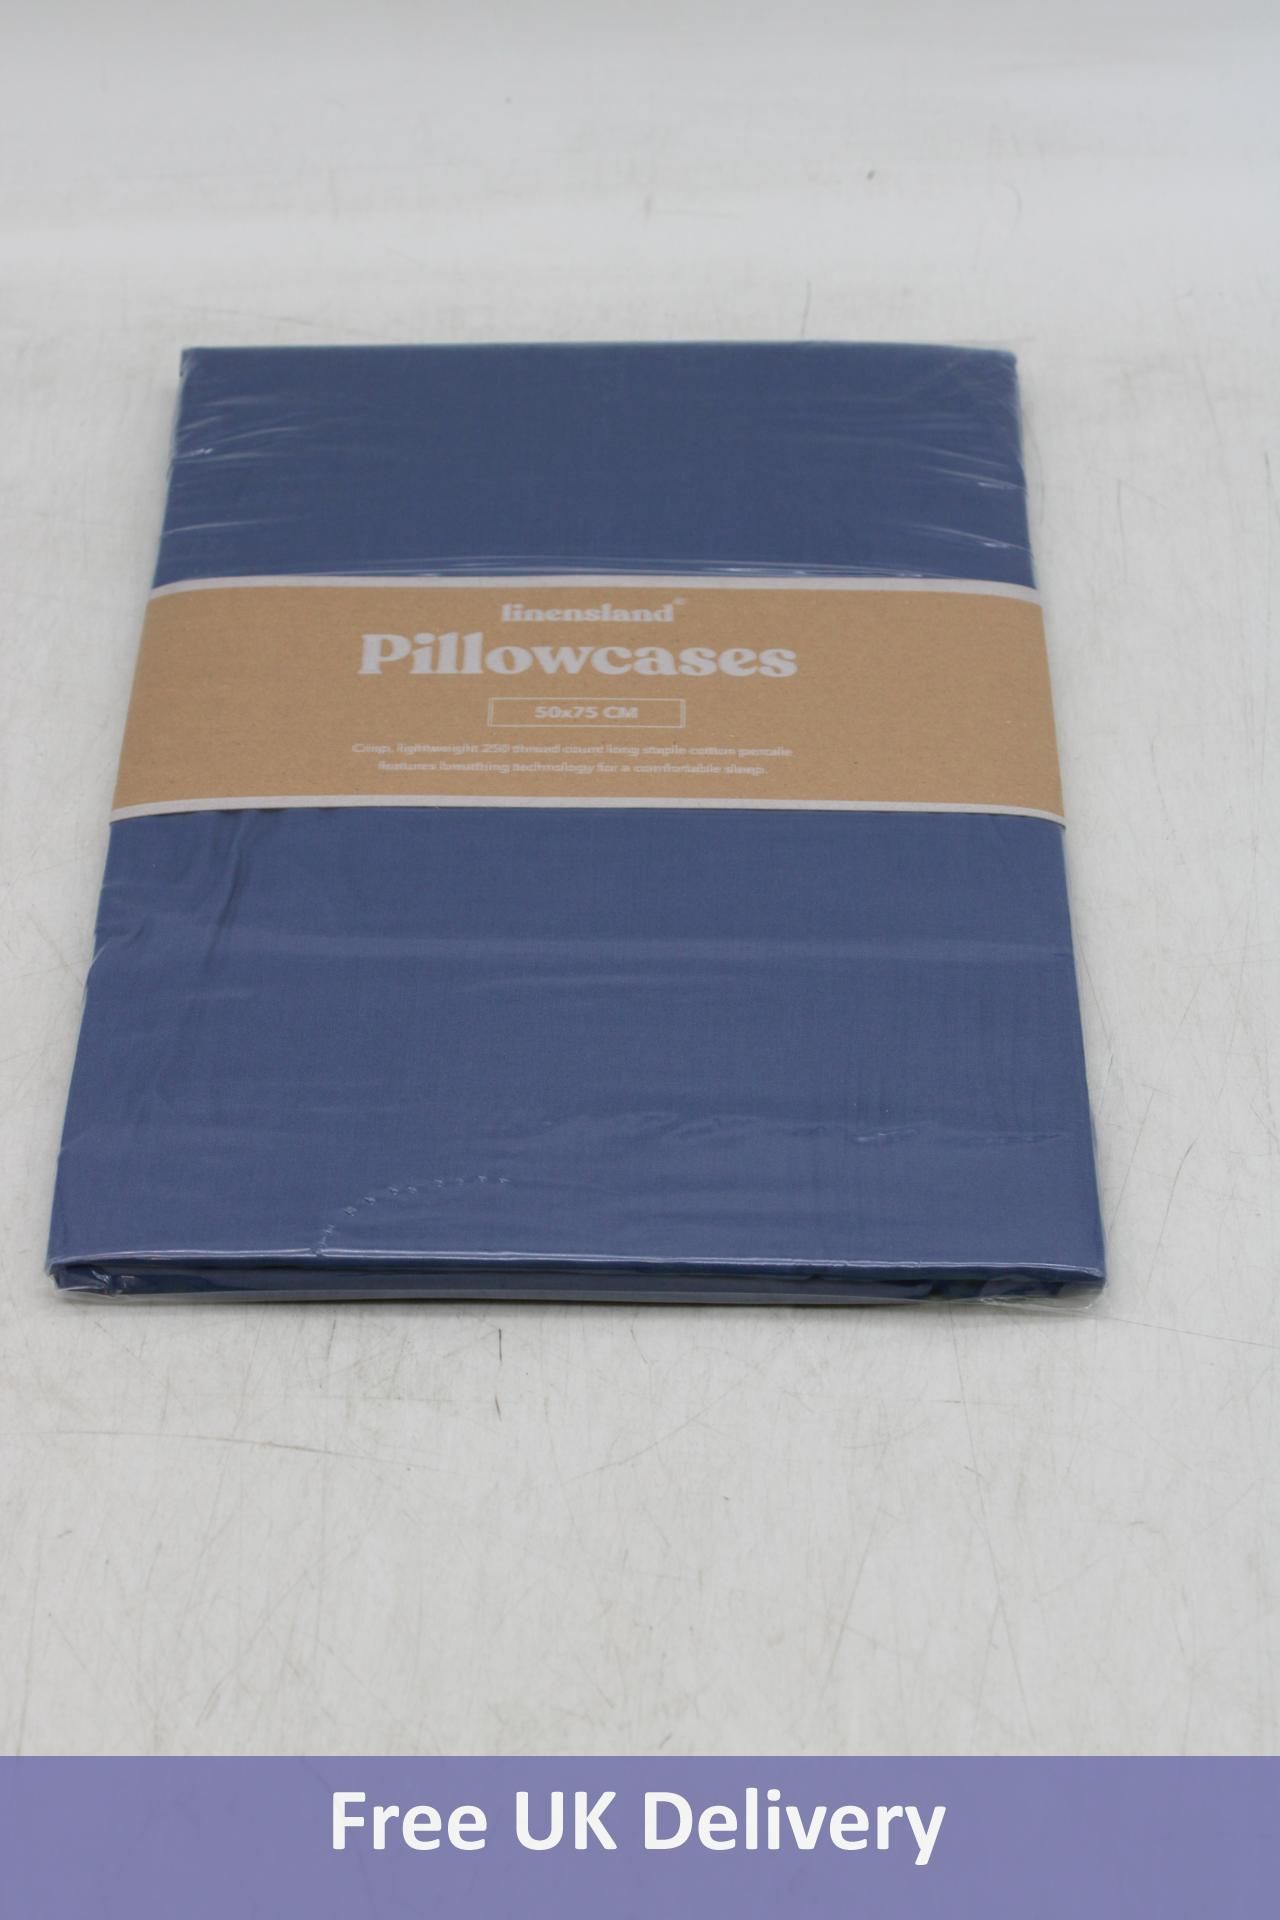 Twenty-five packs of Linensland Pillowcase, Navy, 50 x 75 cm, 4 per pack - Image 2 of 5